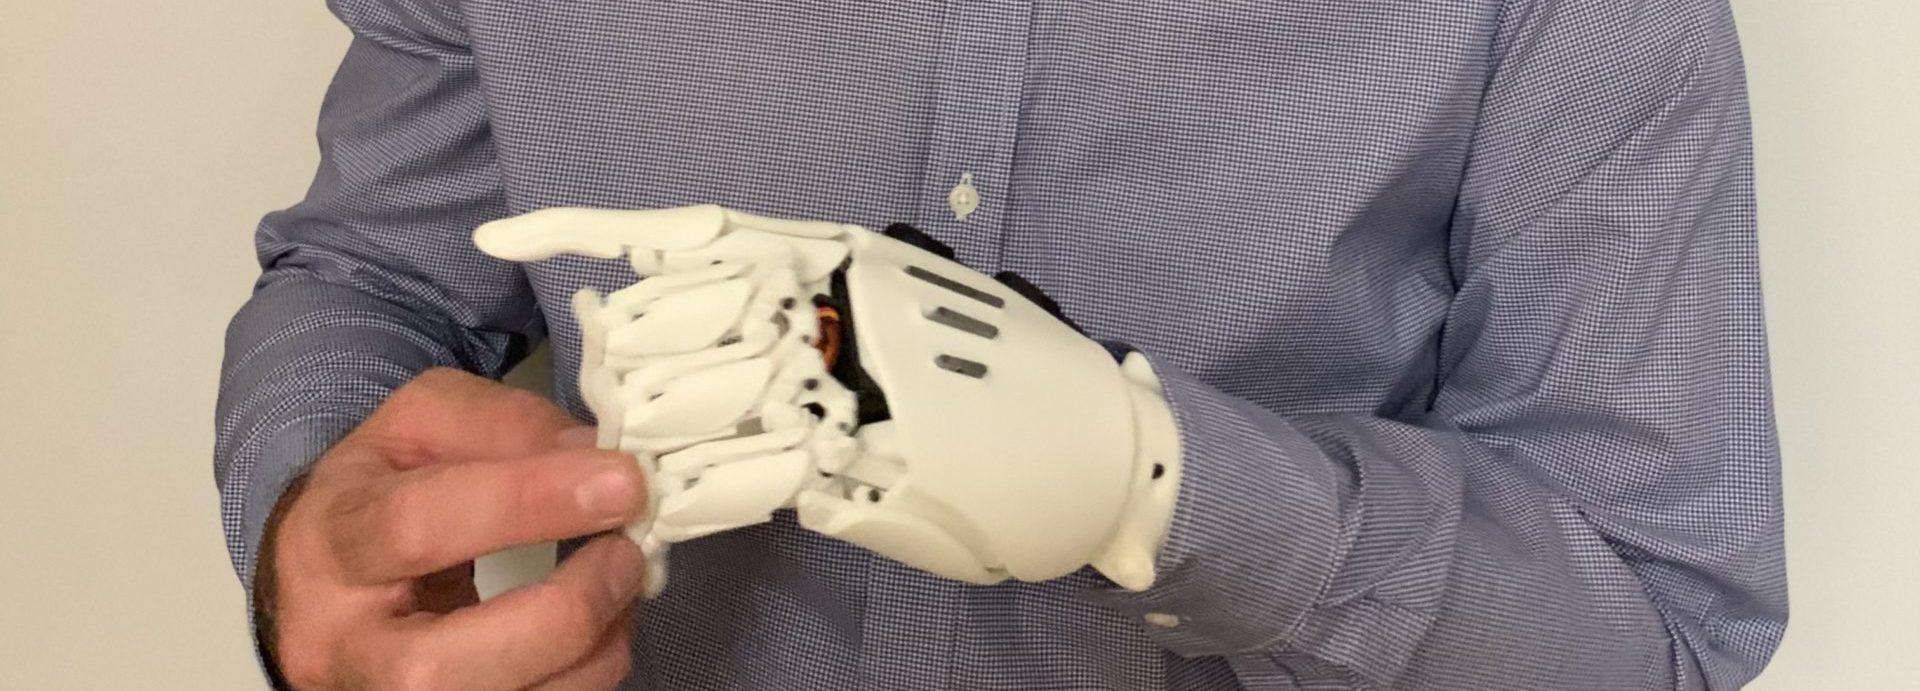 bionic arms close-up